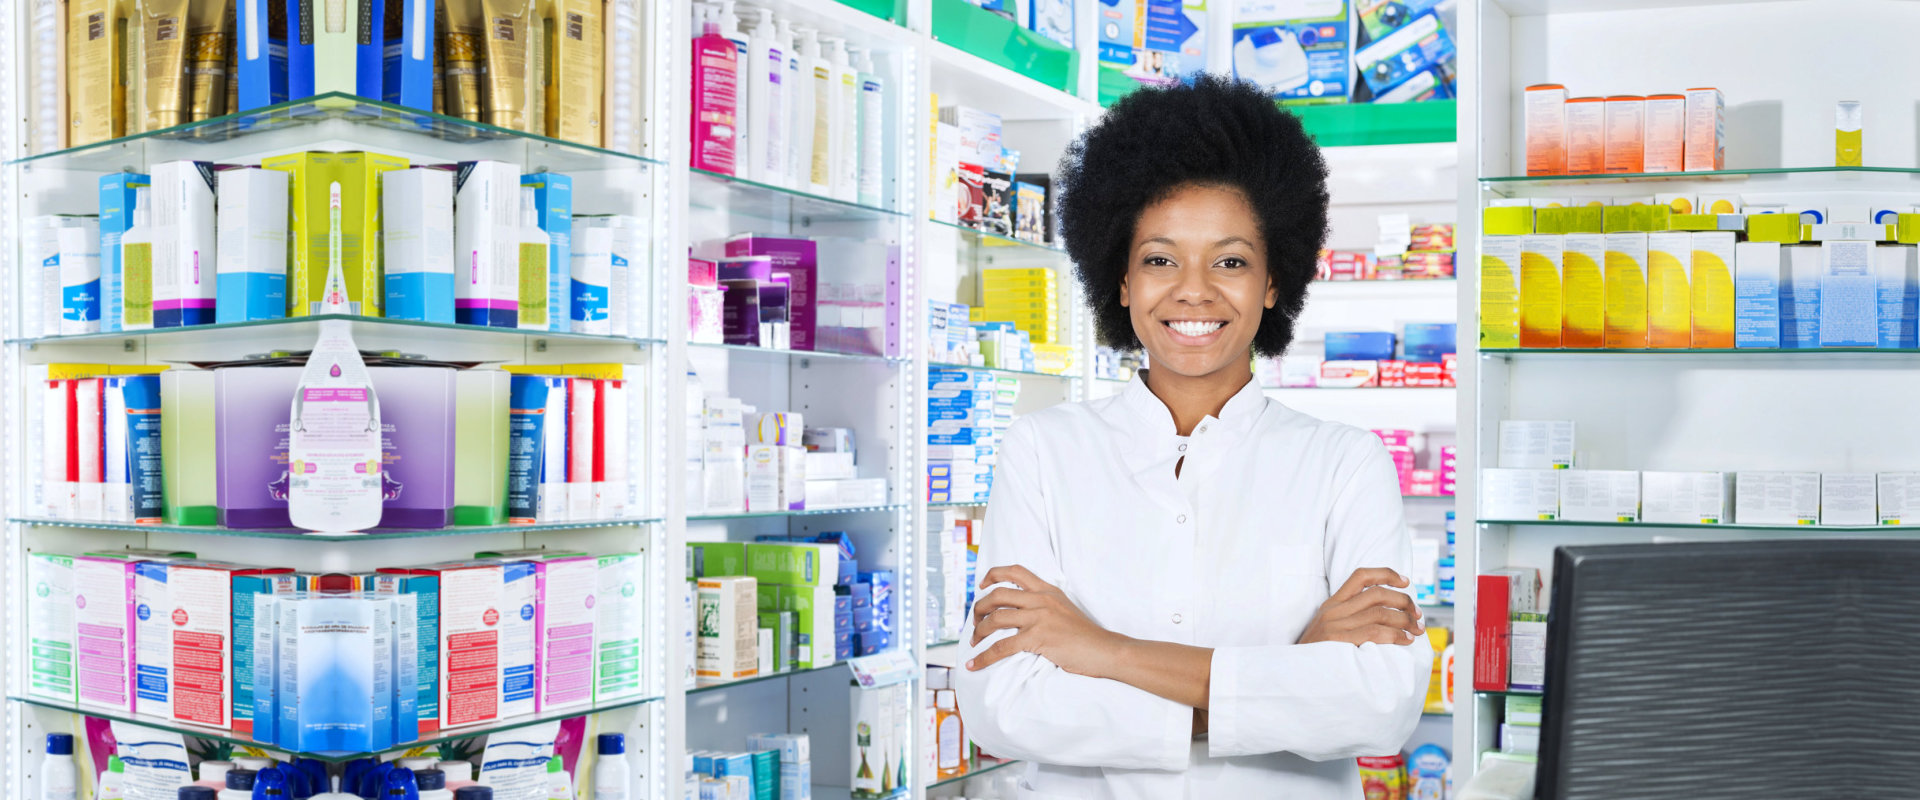 Smiling female chemist standing at the pharmacy